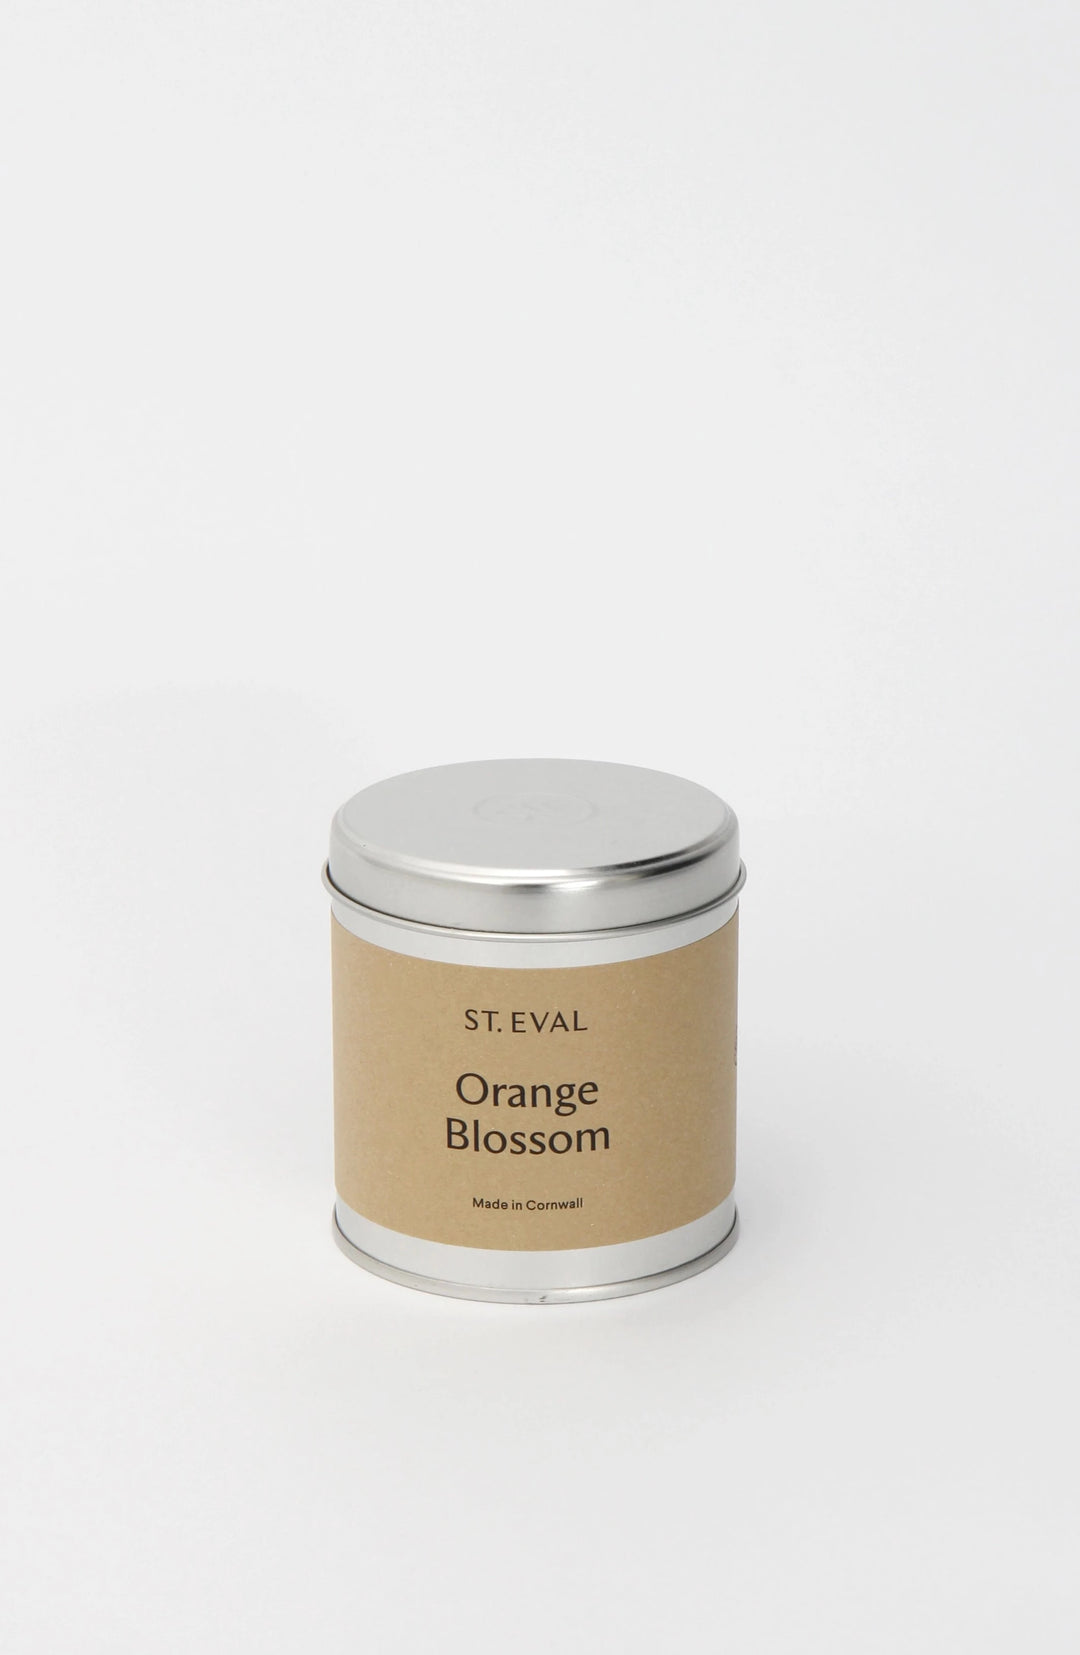 St Eval Candle Tin / Orange Blossom